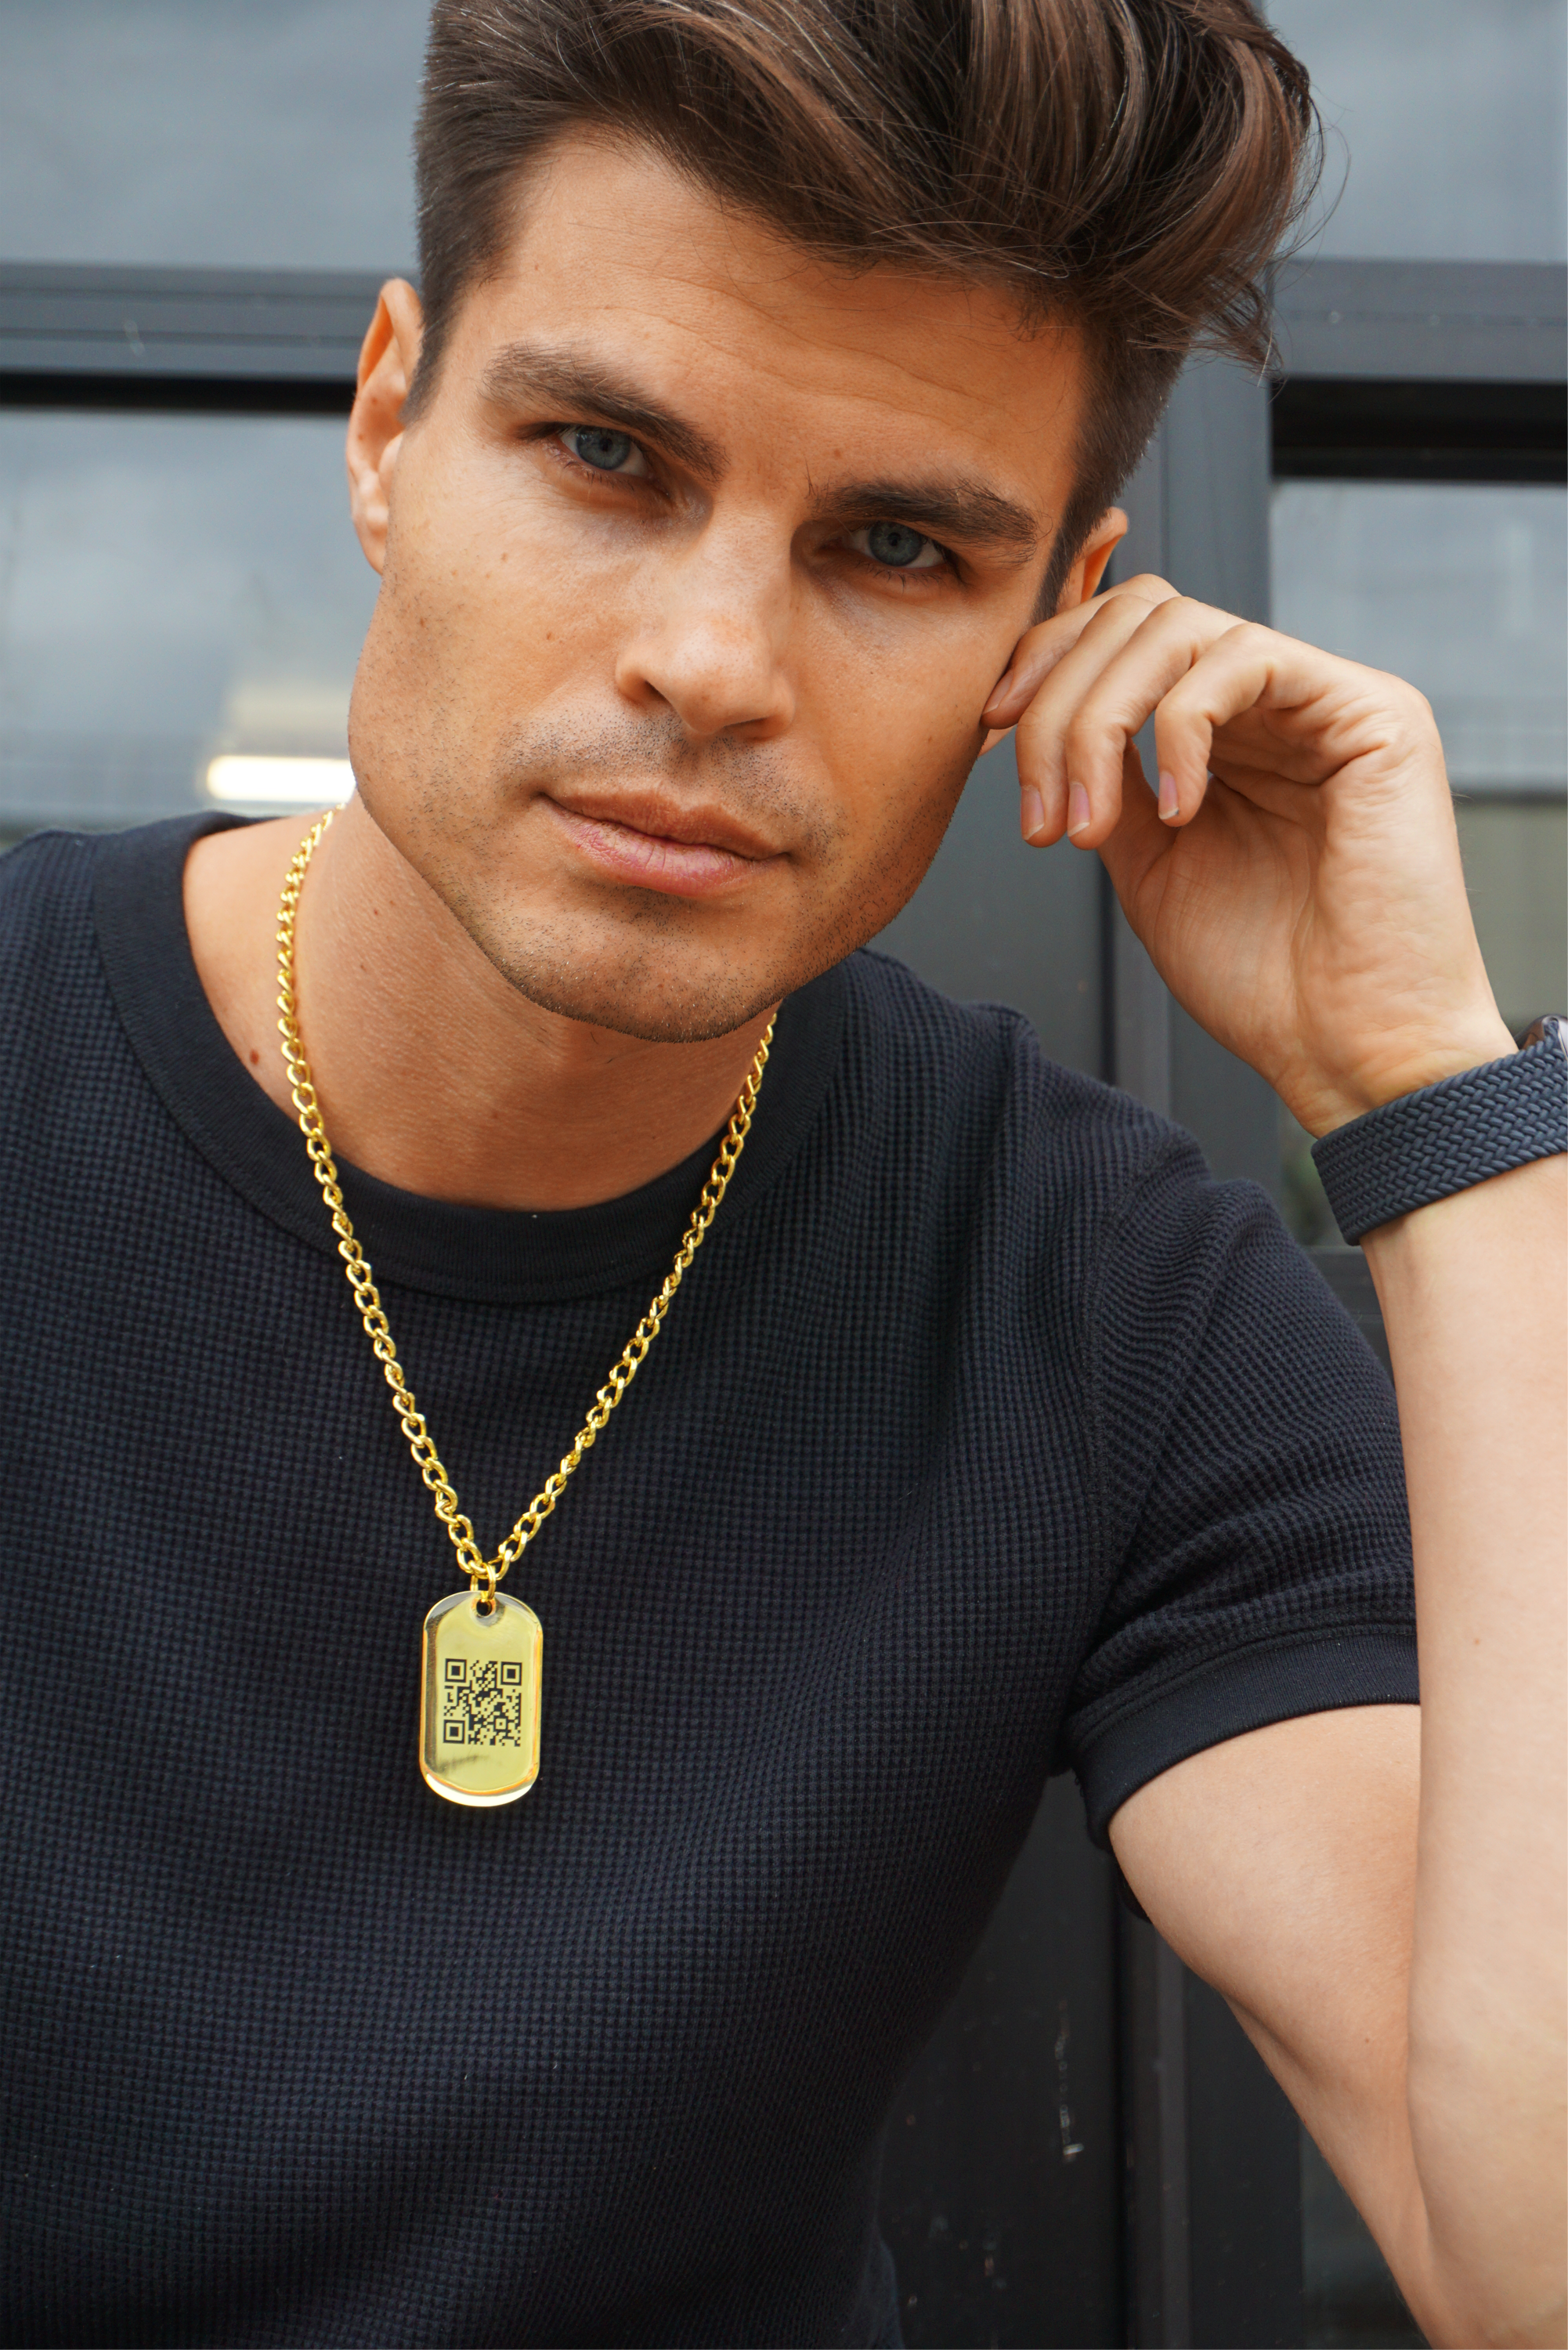 Max Taylor wearing a black shirt & a golden Jumptag QR code necklace